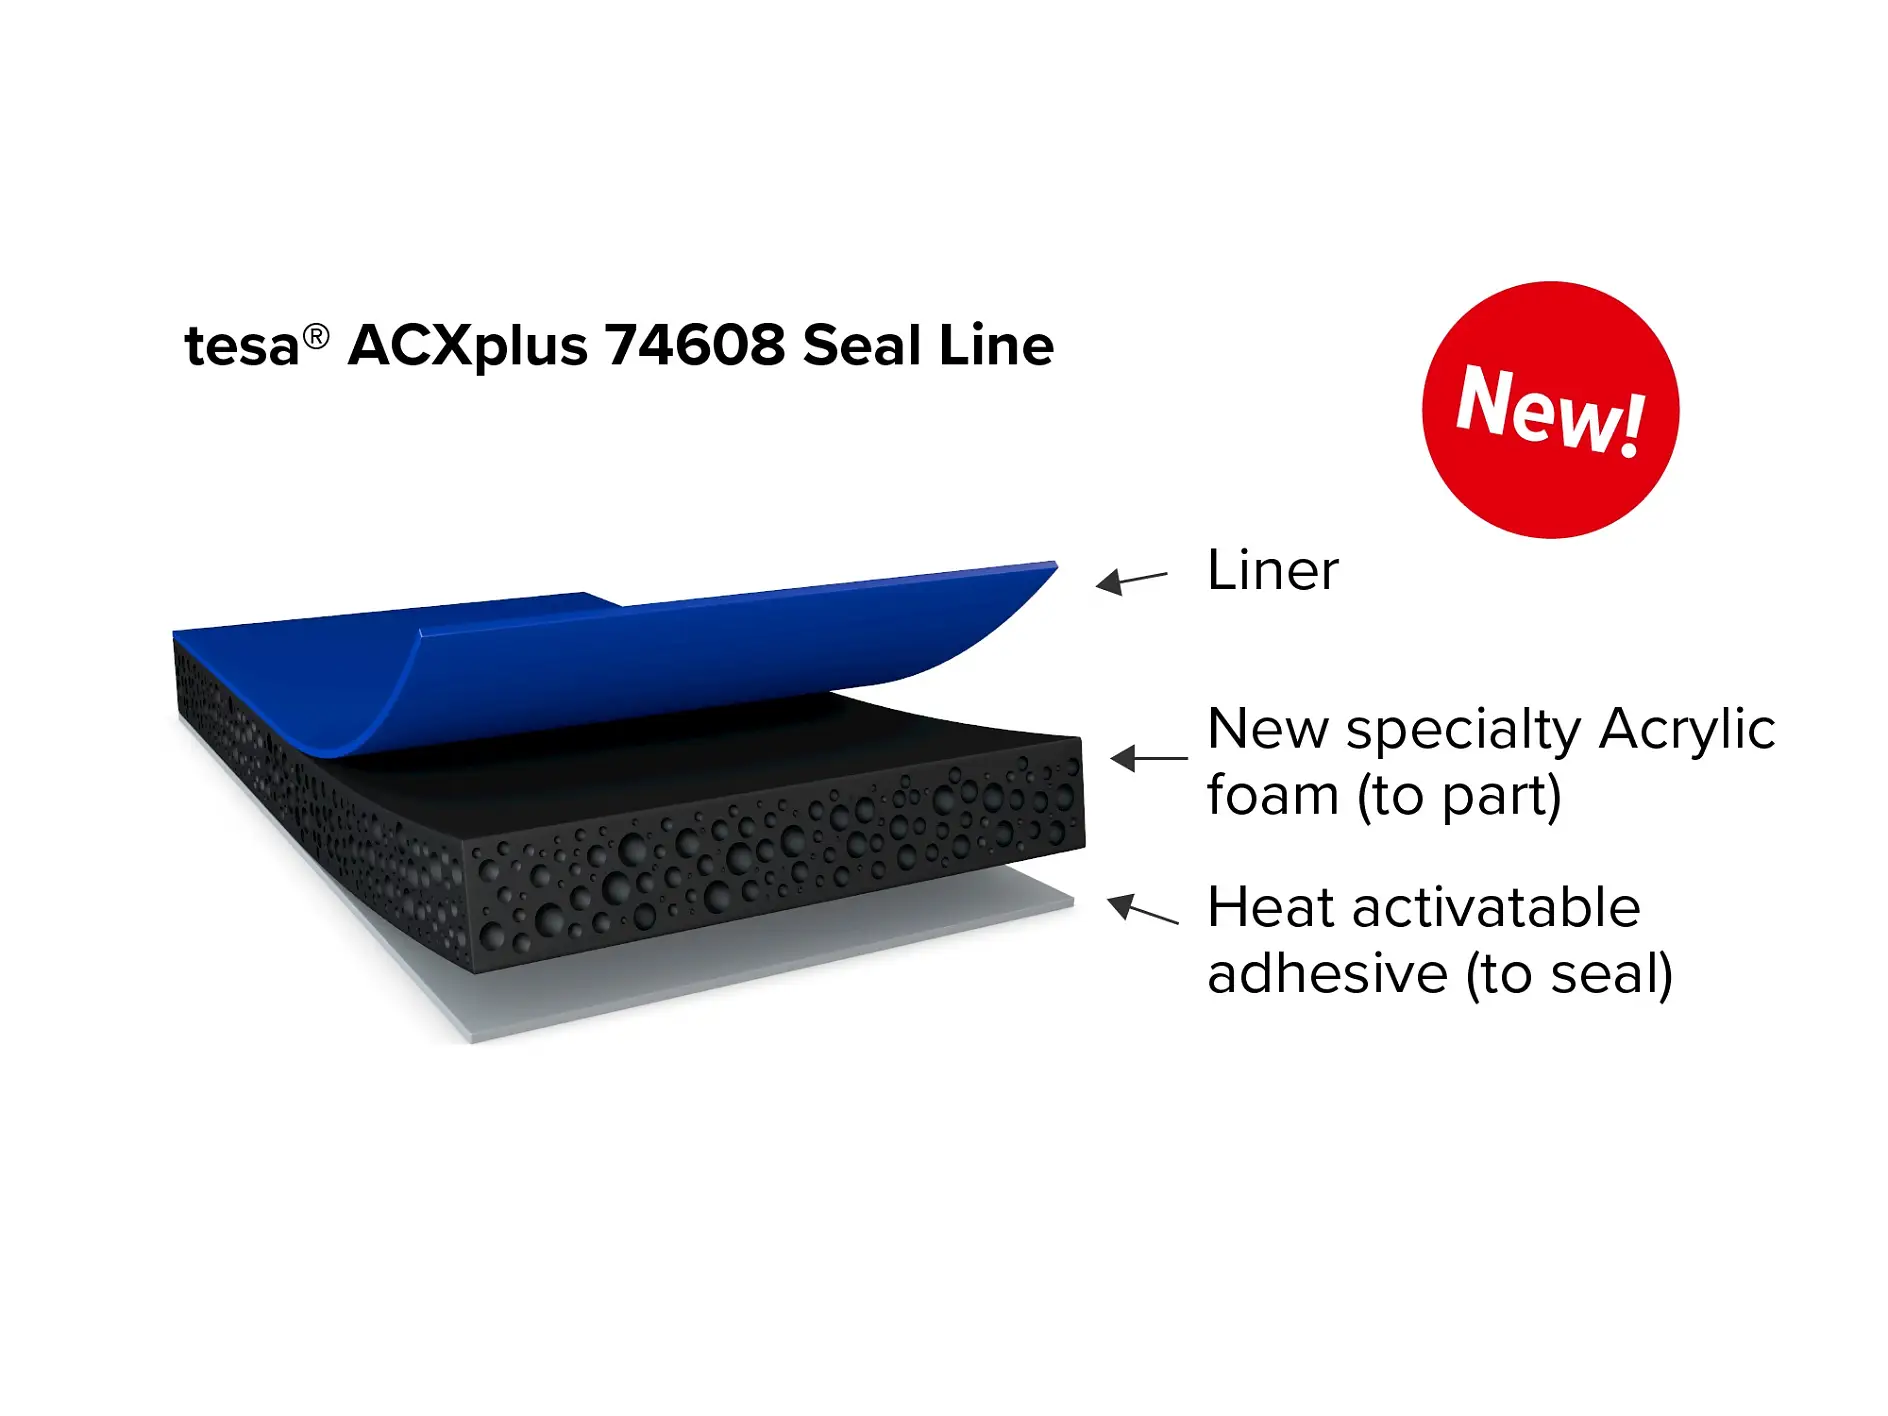 tesa® ACXplus 74608 Seal Line - Product design